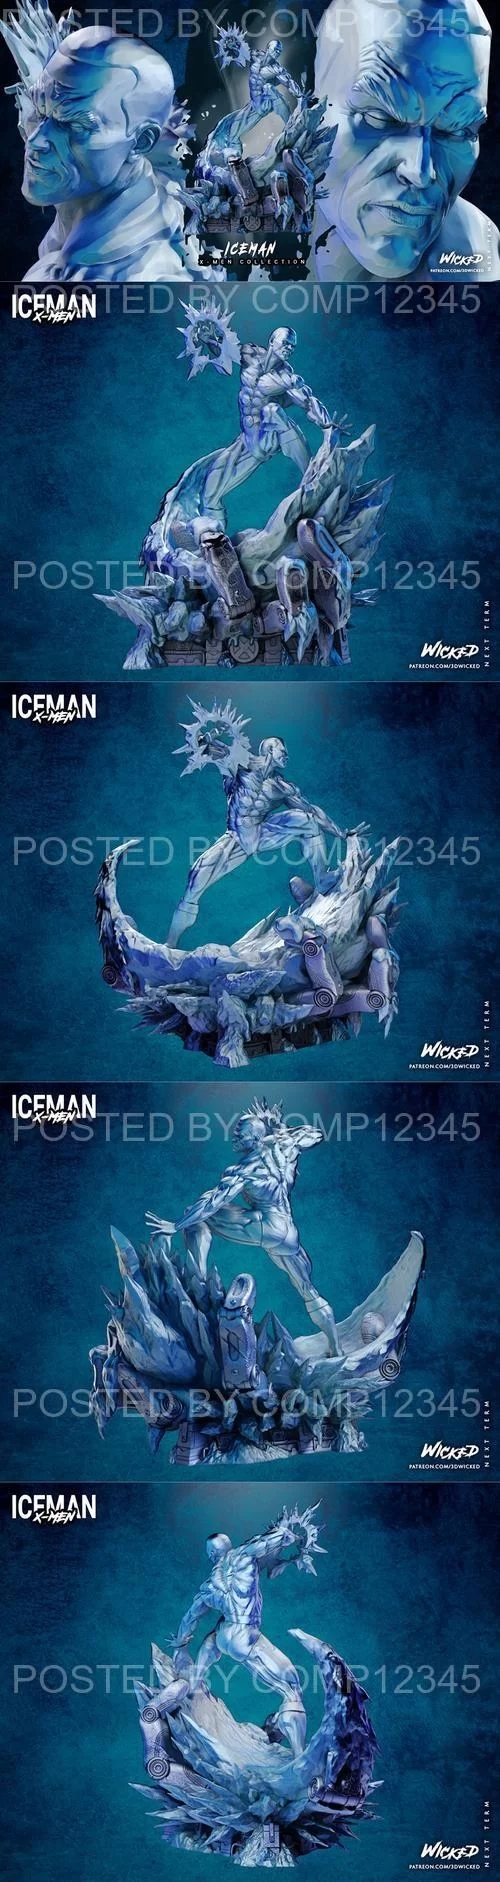 WICKED - Iceman Sculpture